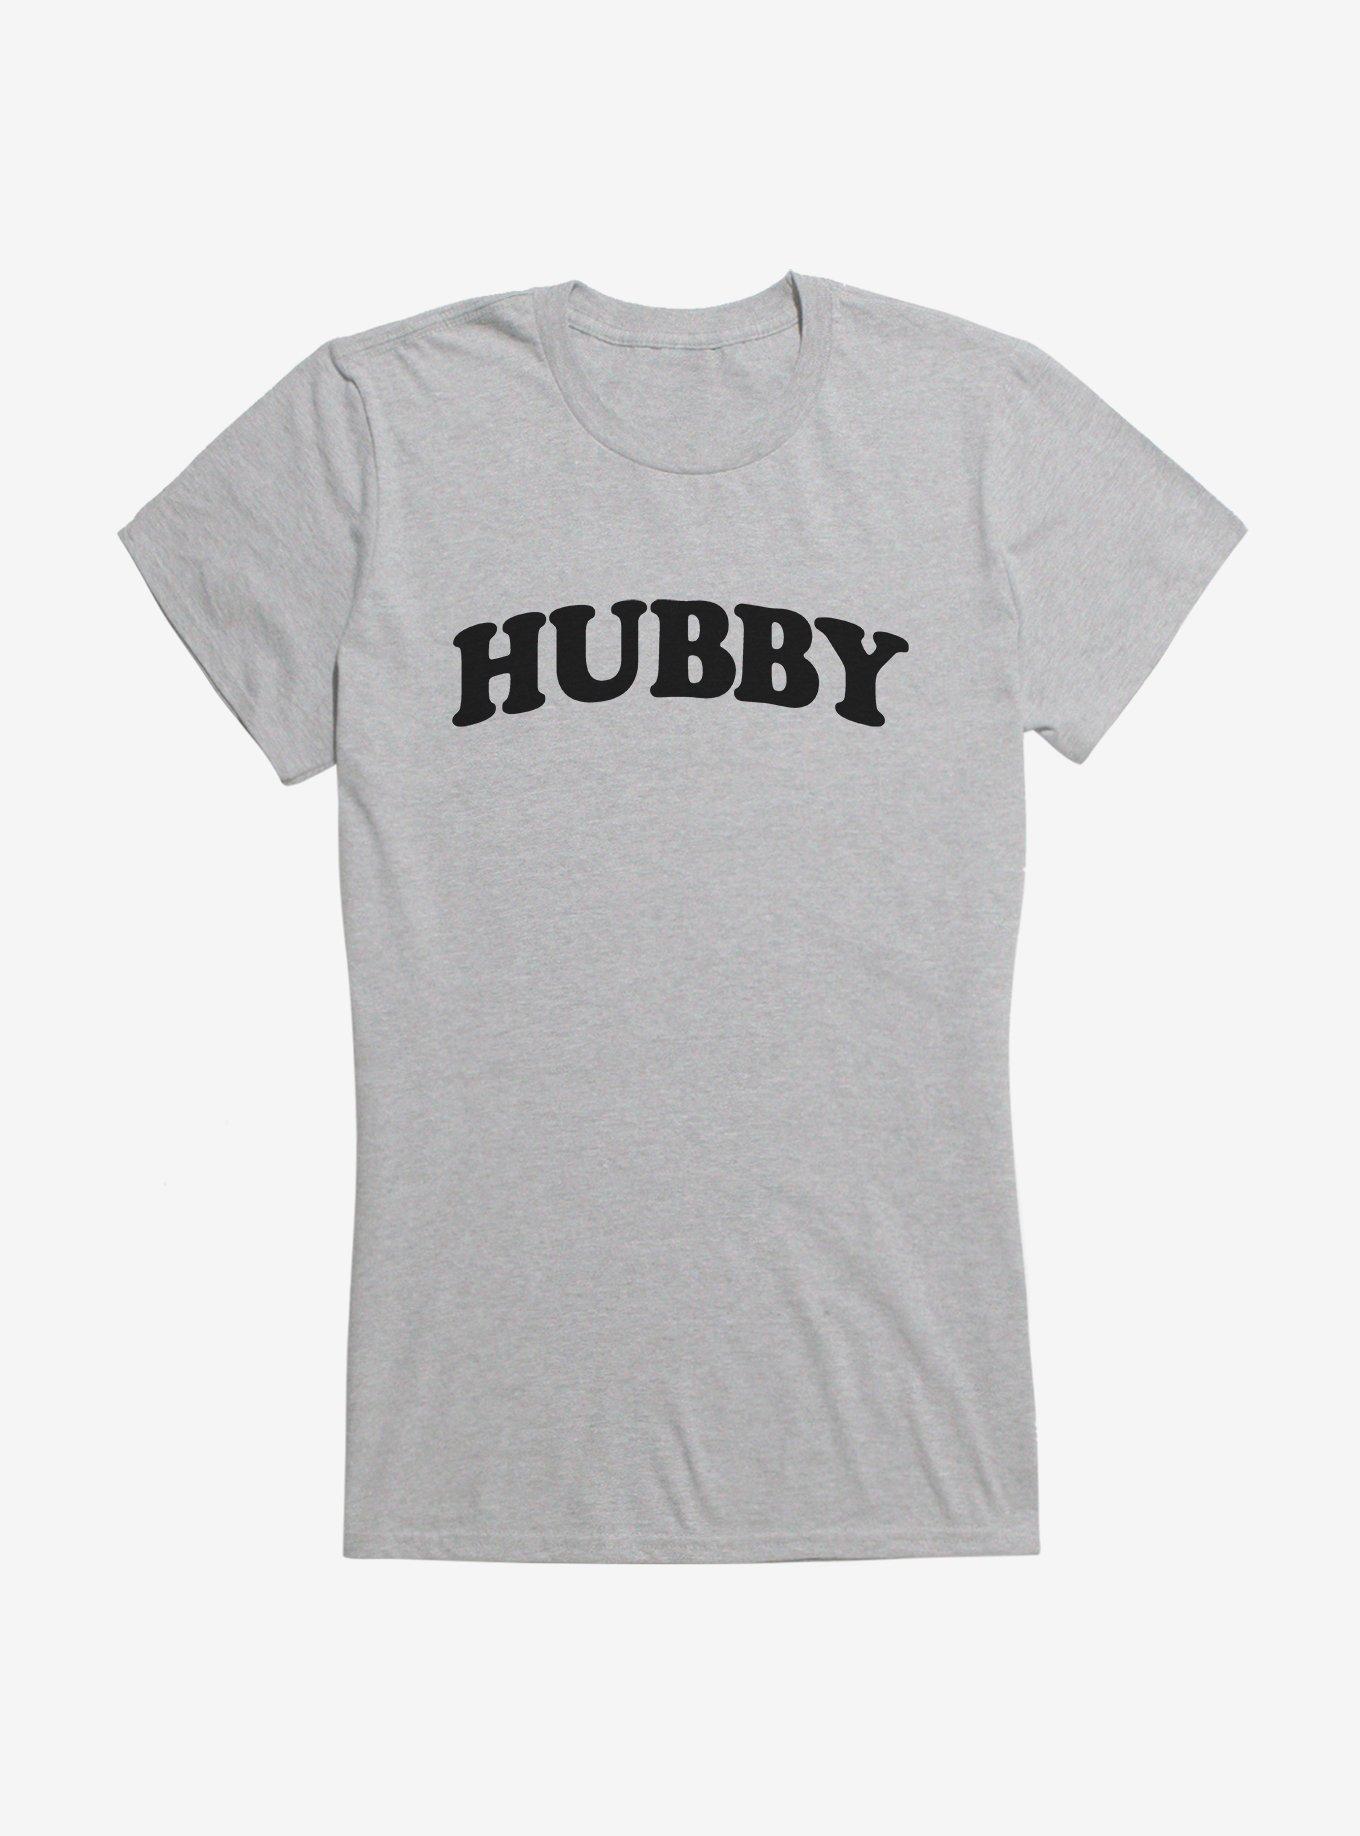 Hot Topic Hubby Girls T-Shirt, , hi-res